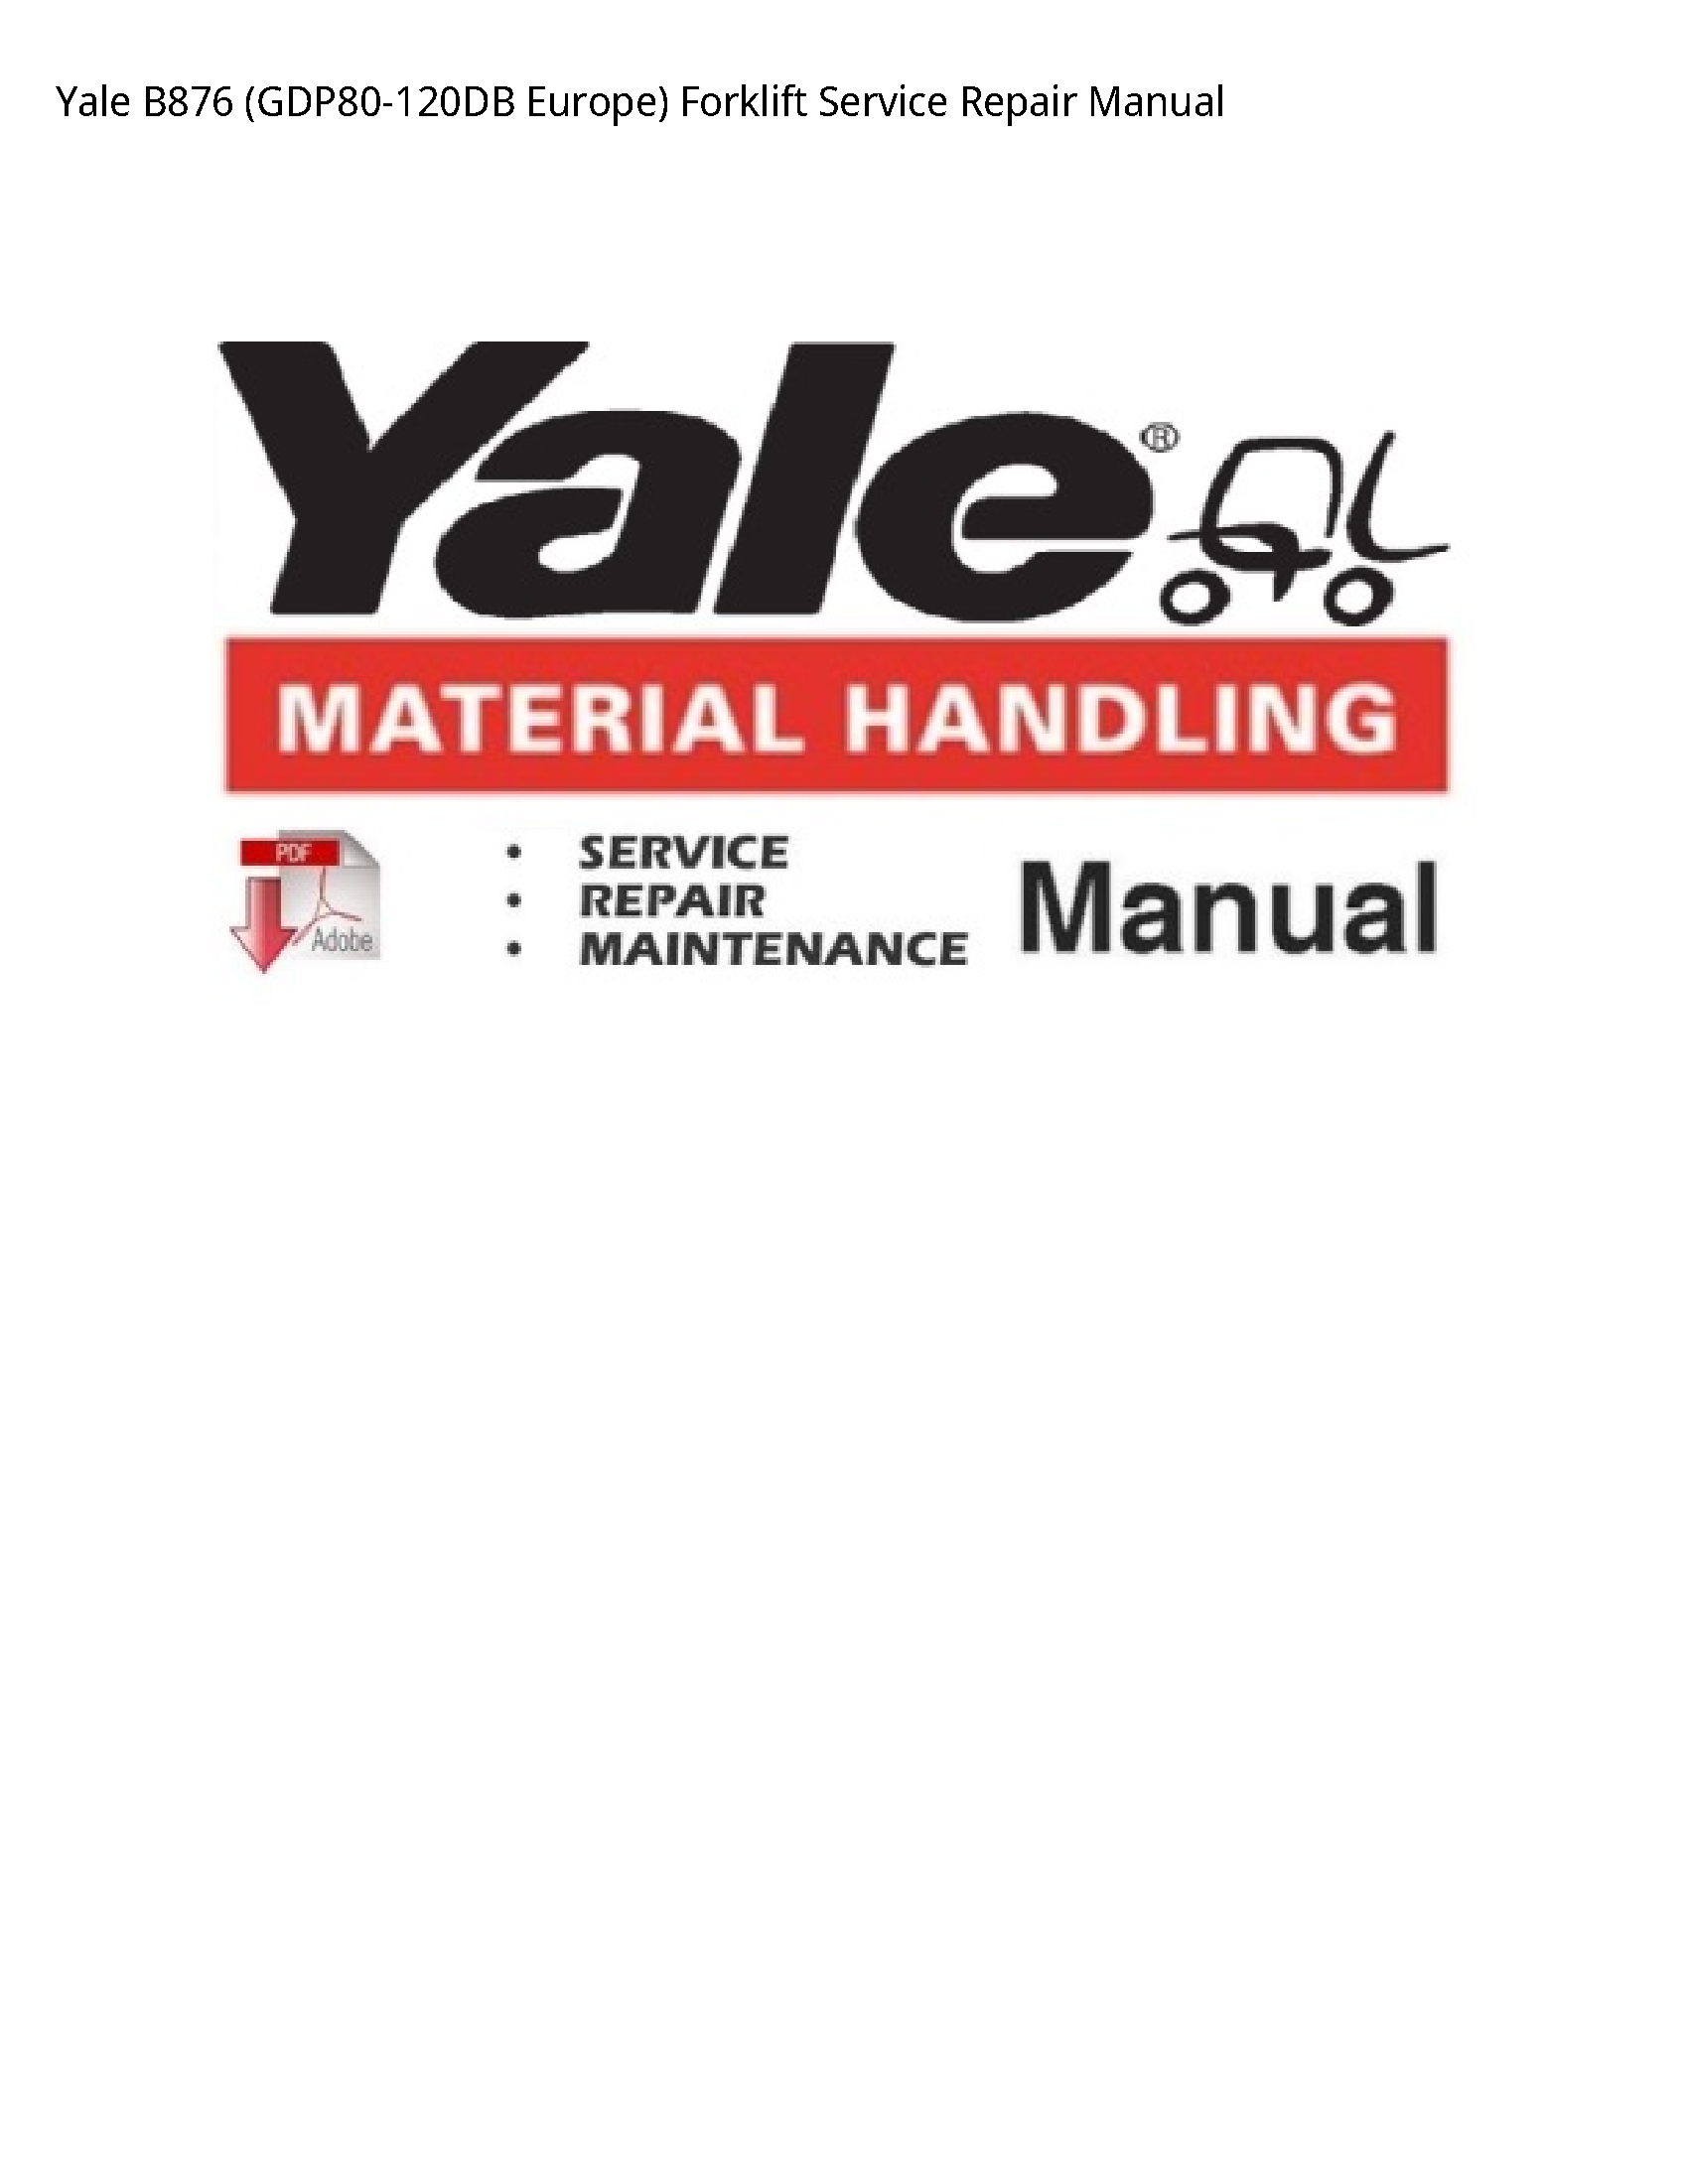 Yale B876 Europe) Forklift manual